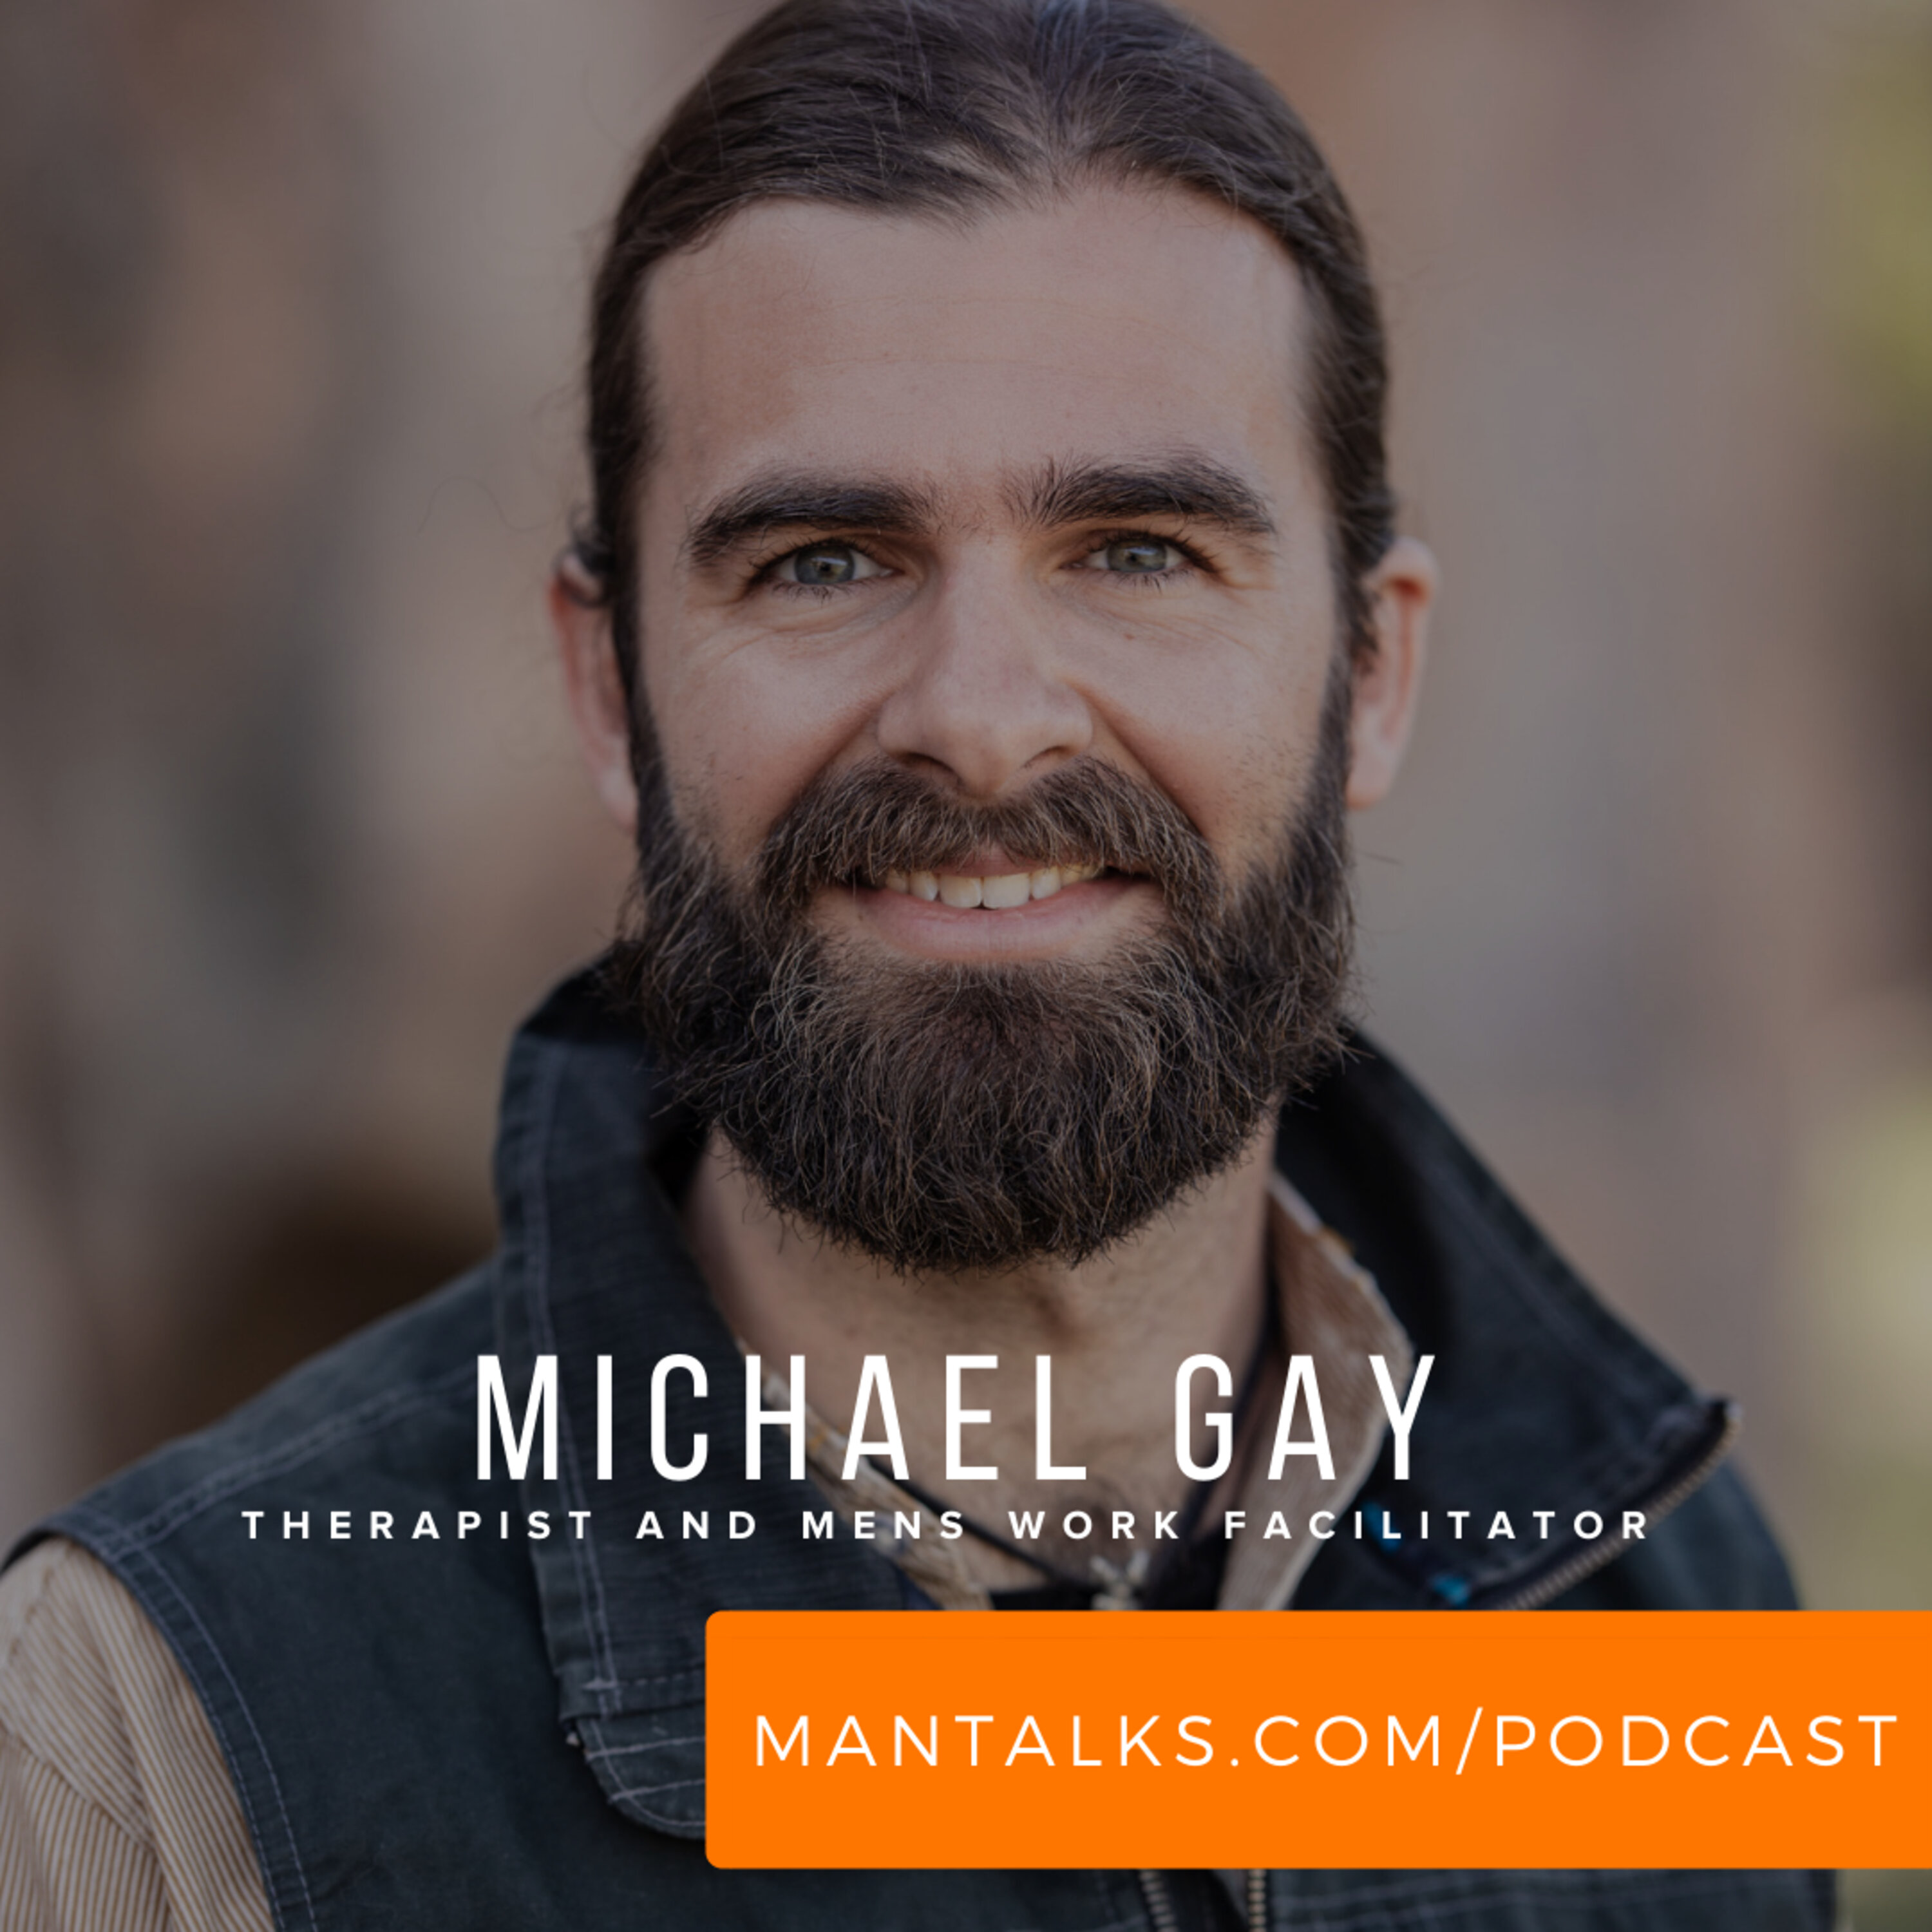 Michael Gay - What Is Mens Work?